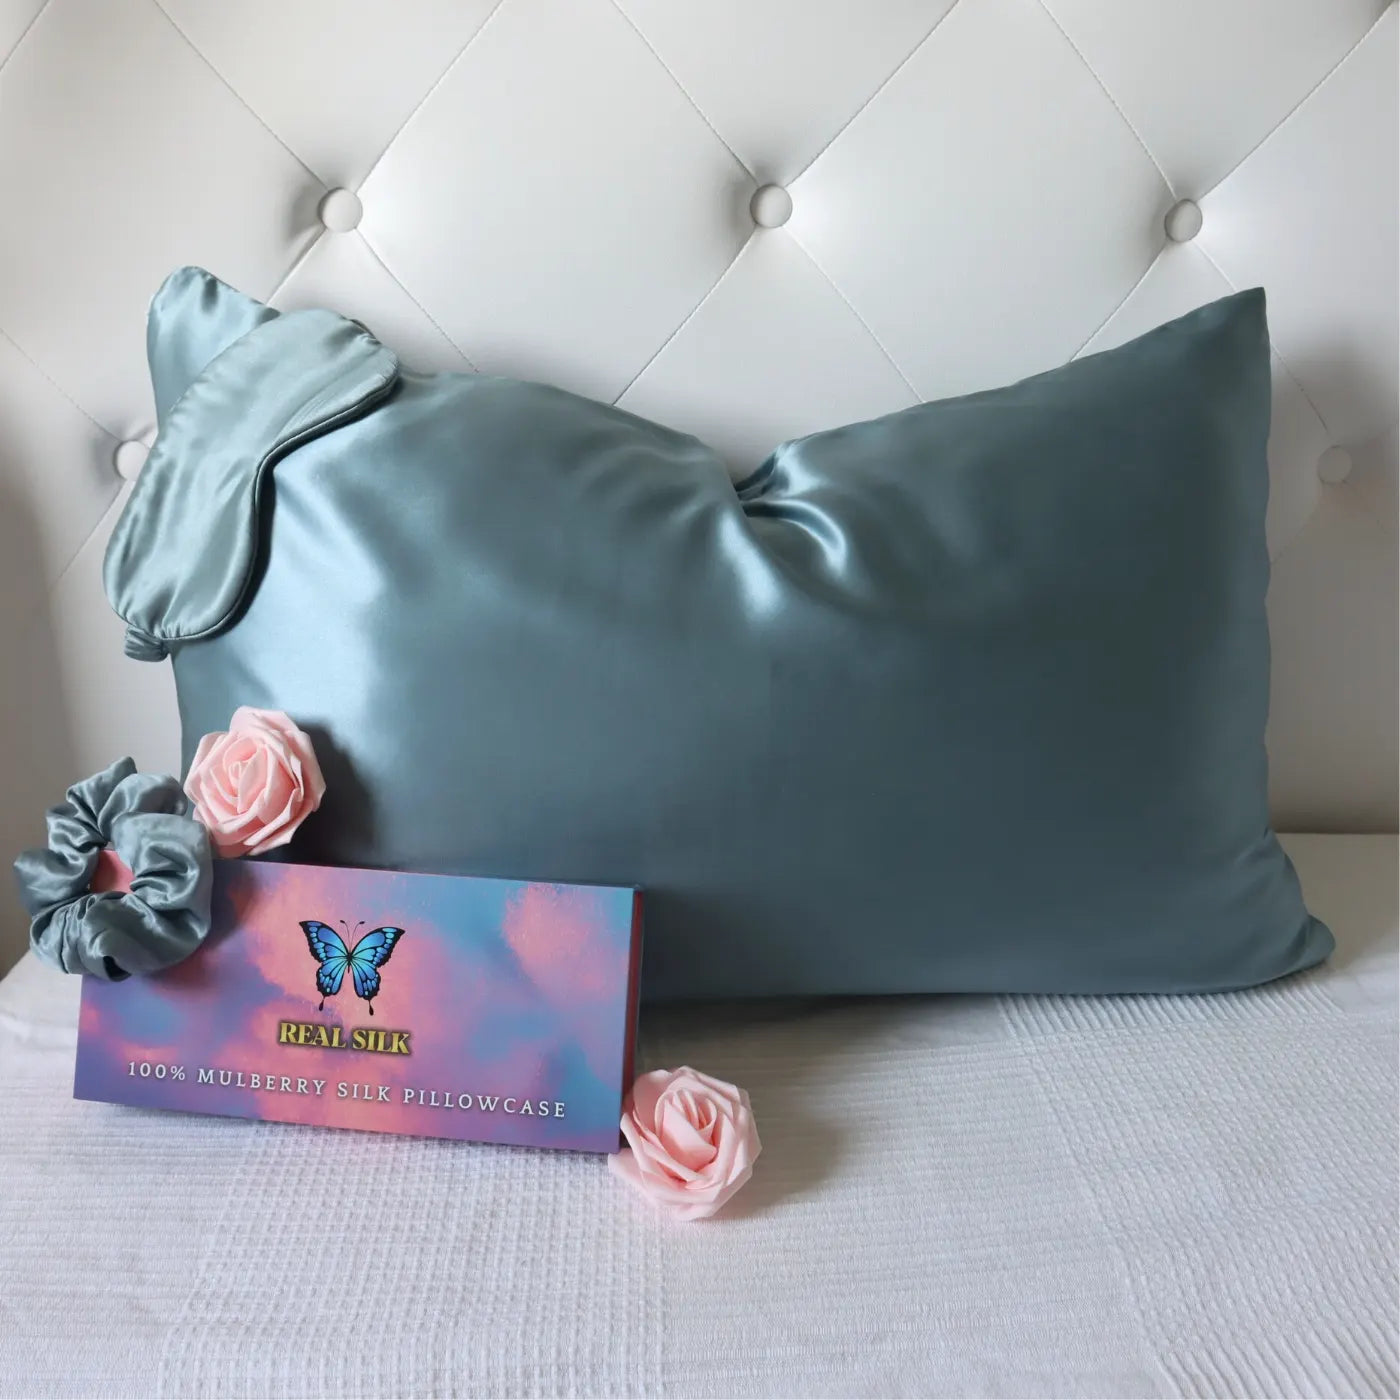 Mulberry Silk Gift Set - 22 Momme Silk Pillowcase, Sleeping Mask & Hair Scrunchie light blue